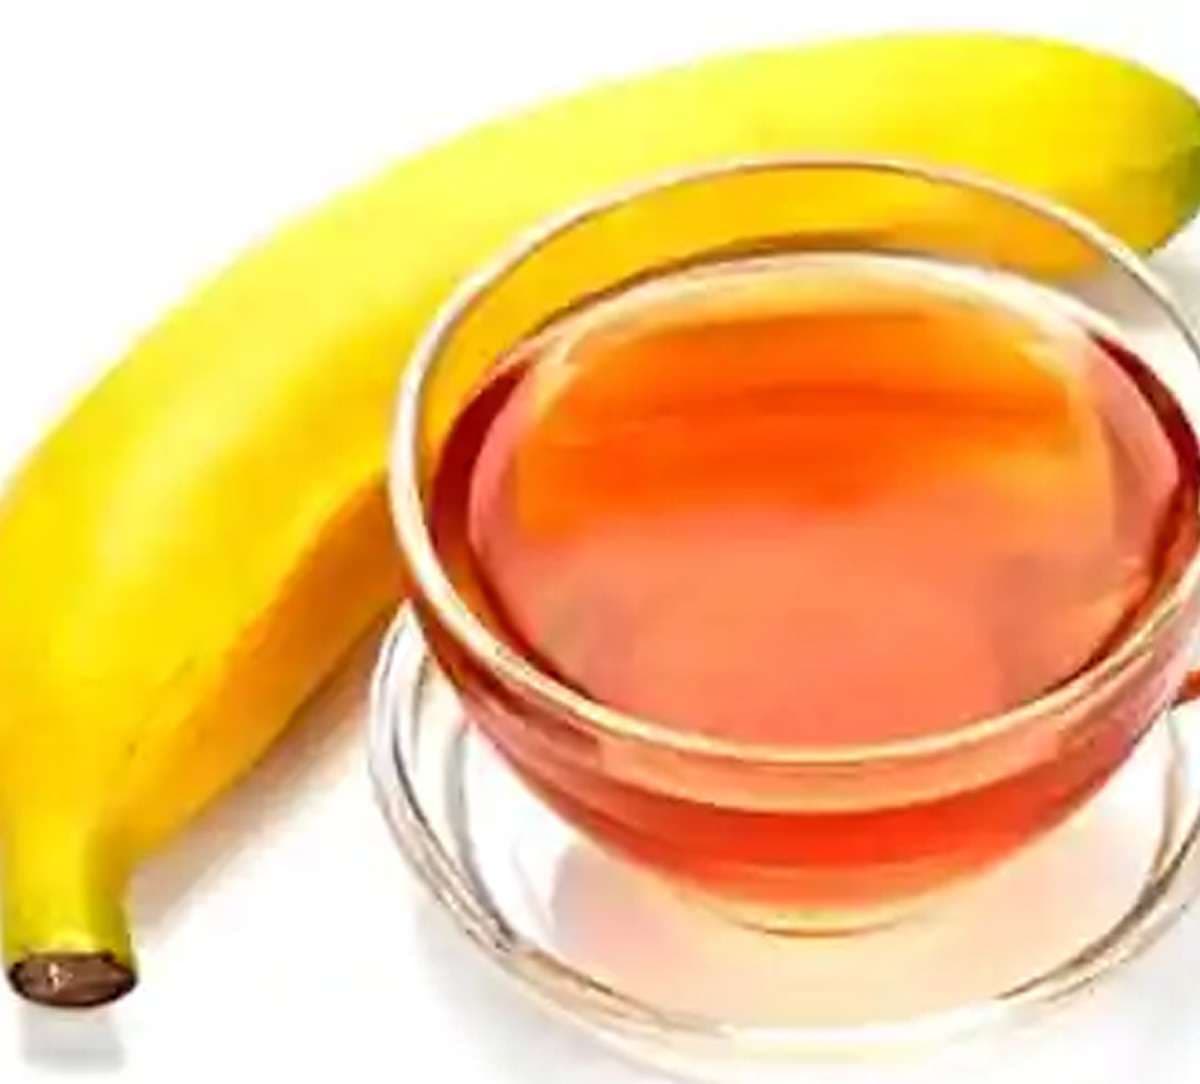 banana-tea-for-weight-loss.jpg